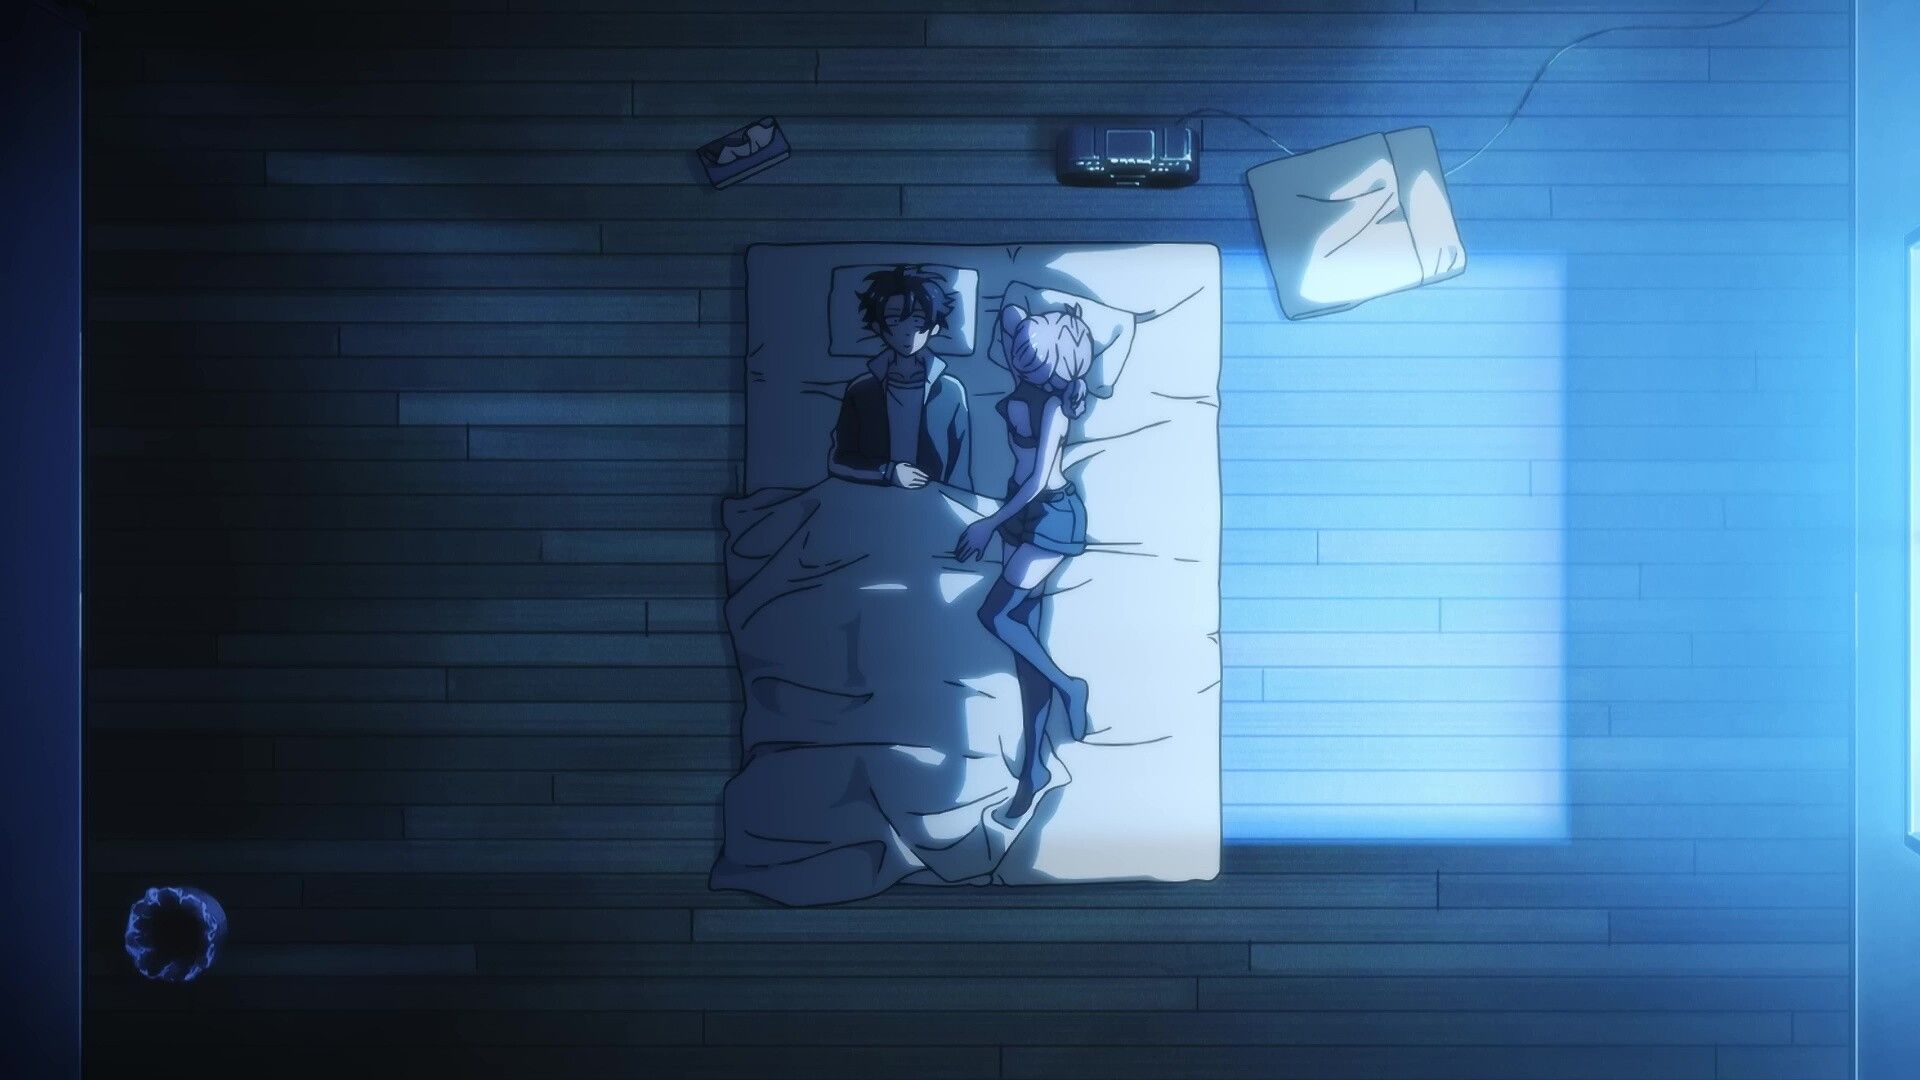 Anime "Yofukashi no Uta" A scene where you yapple with an erotic girl on a futon! Broadcasting starts in July 14